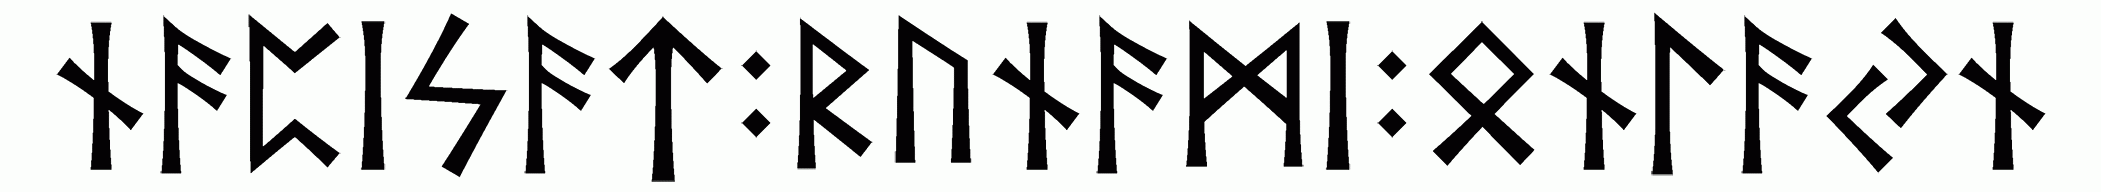 napisat+runami+onlayn - Напиши имя  НАПИСАТЬ+РУНАМИ+ОНЛАЙН рунами  - ᚾᚨᛈᛁᛋᚨᛏ:ᚱᚢᚾᚨᛗᛁ:ᛟᚾᛚᚨᛃᚾ - Значение и характер имени  НАПИСАТЬ+РУНАМИ+ОНЛАЙН - 